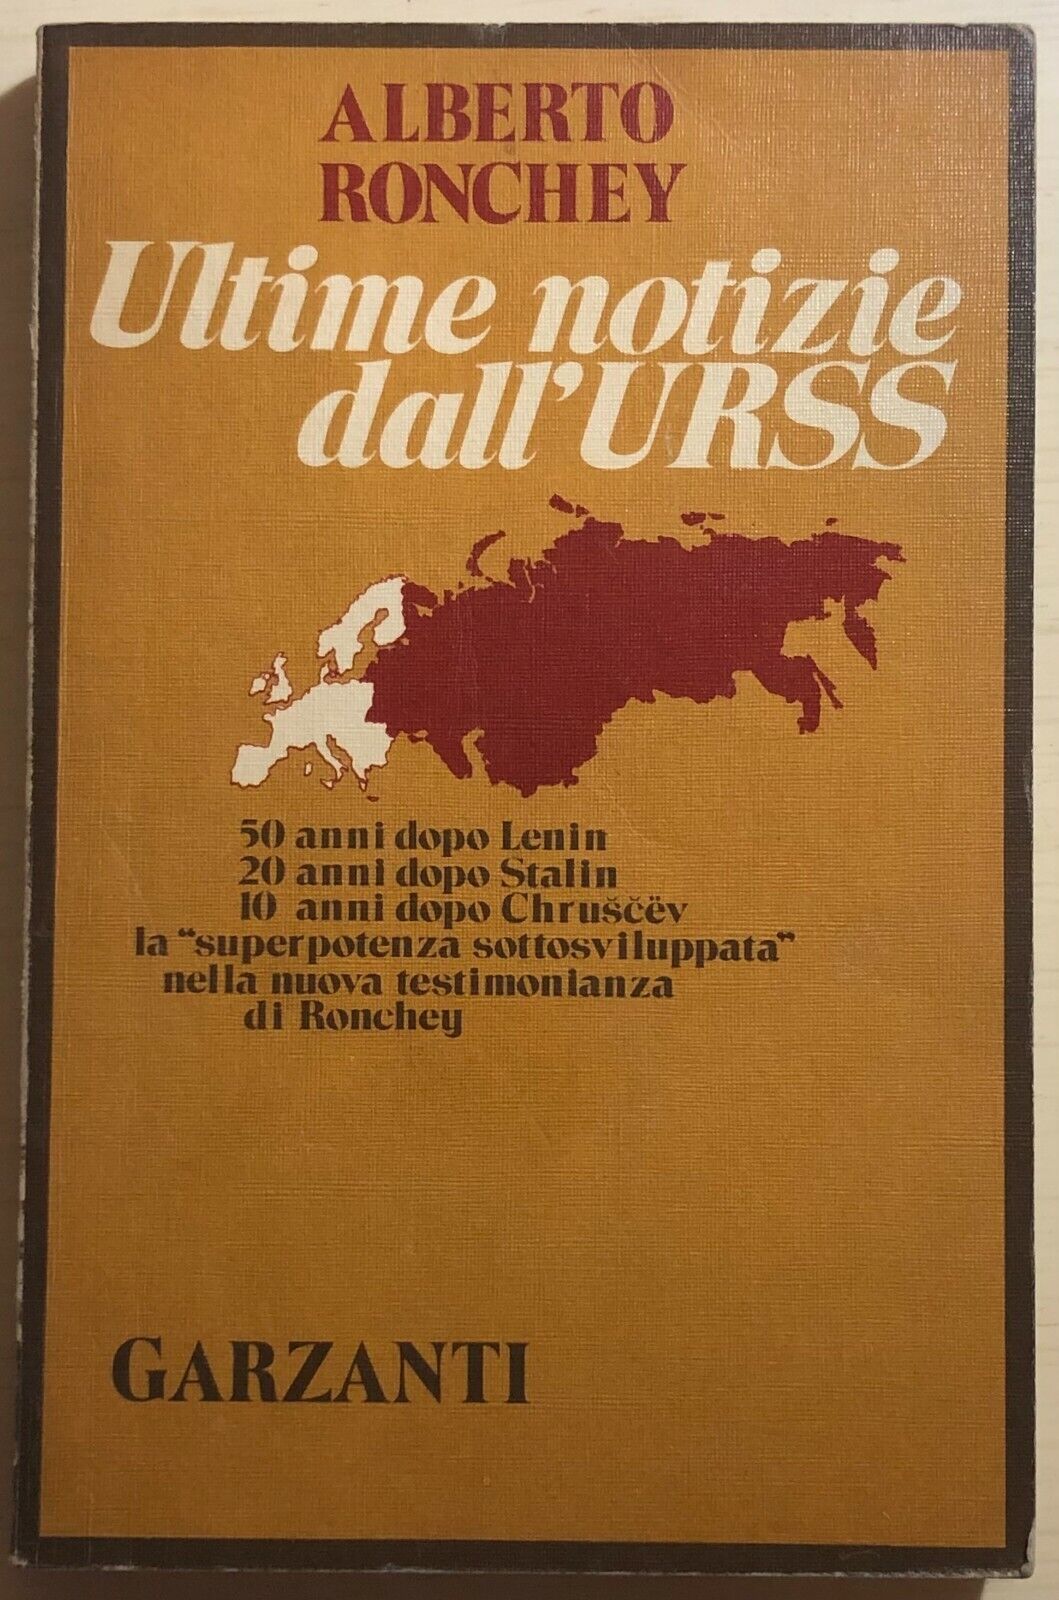 Ultime notizie dalL'URSS di Alberto Ronchey,  1974,  Garzanti